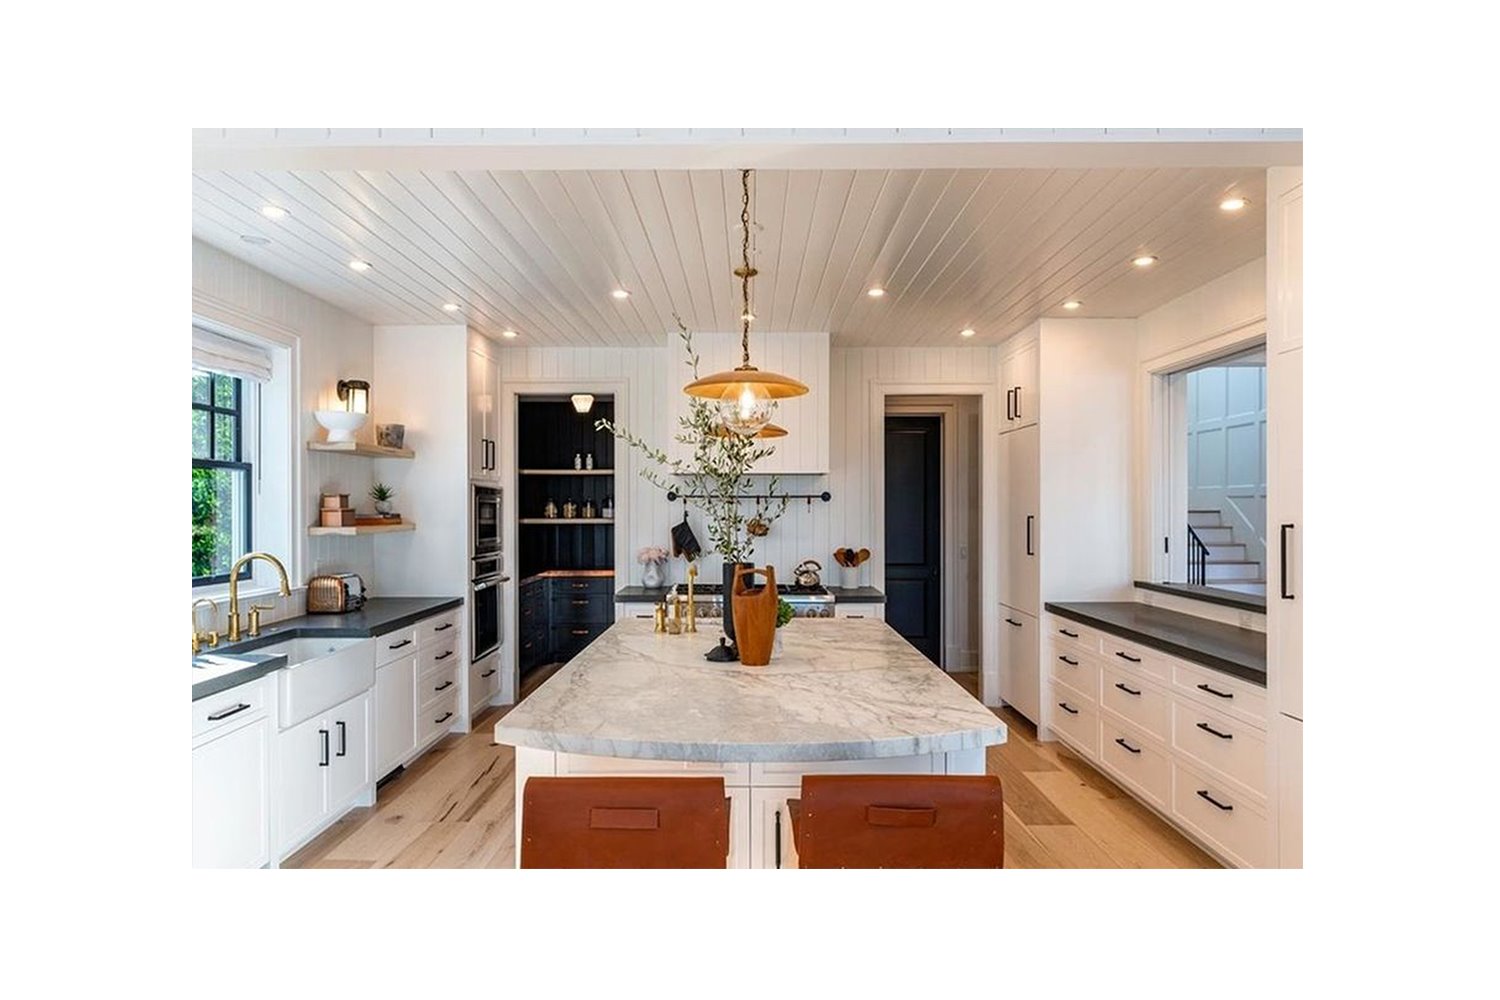 Casa Dakota Johnson y Chris Martin en Malibu cocina con muebles blancos